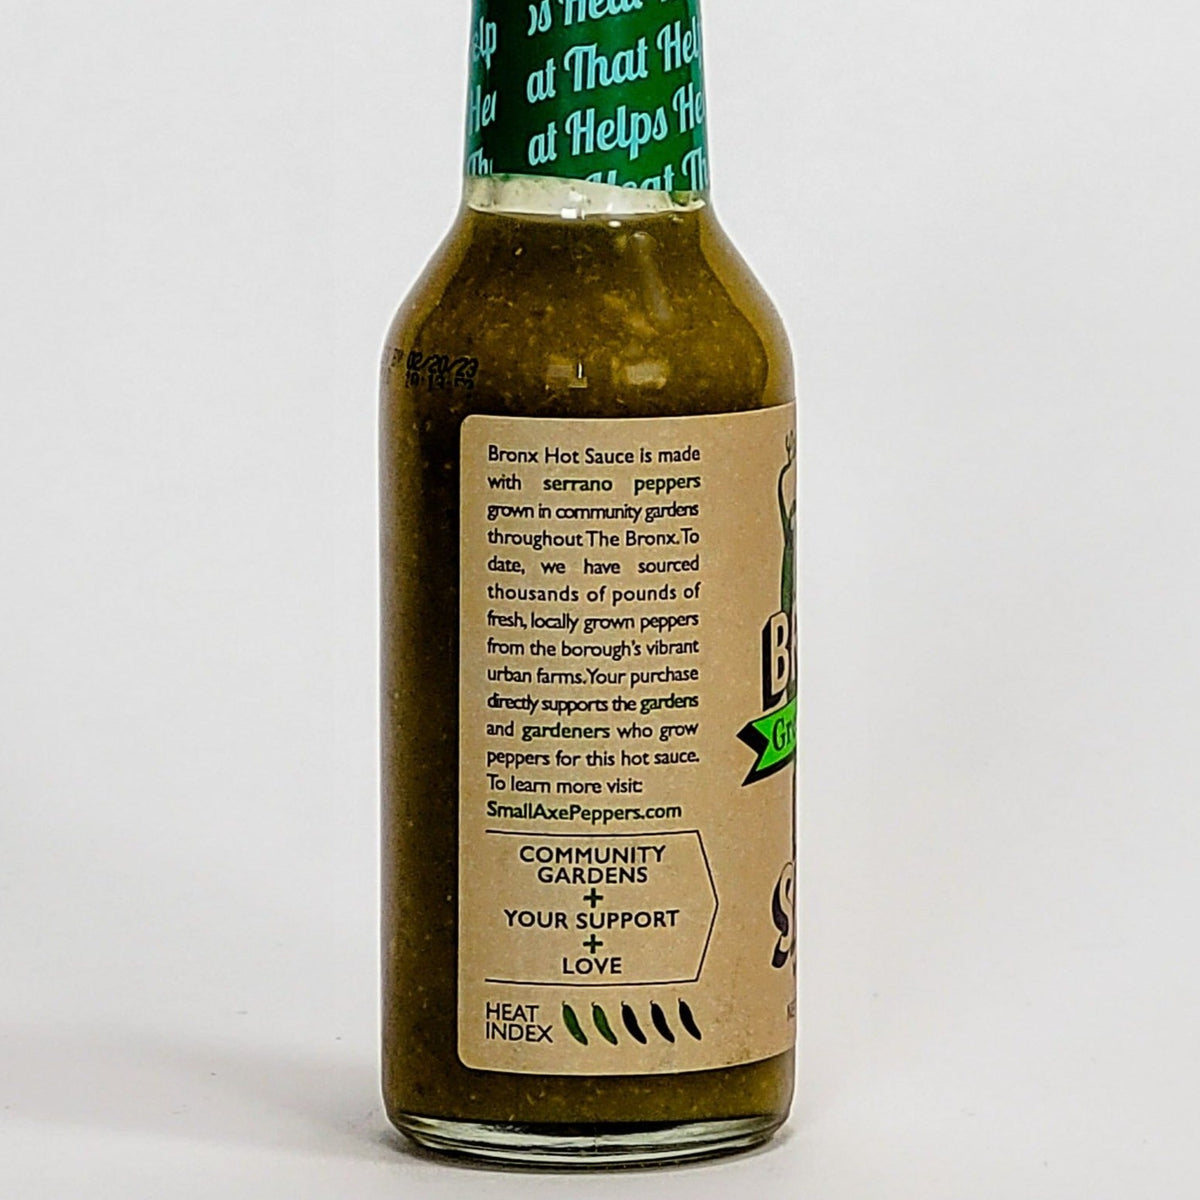 bronx hot sauce label information